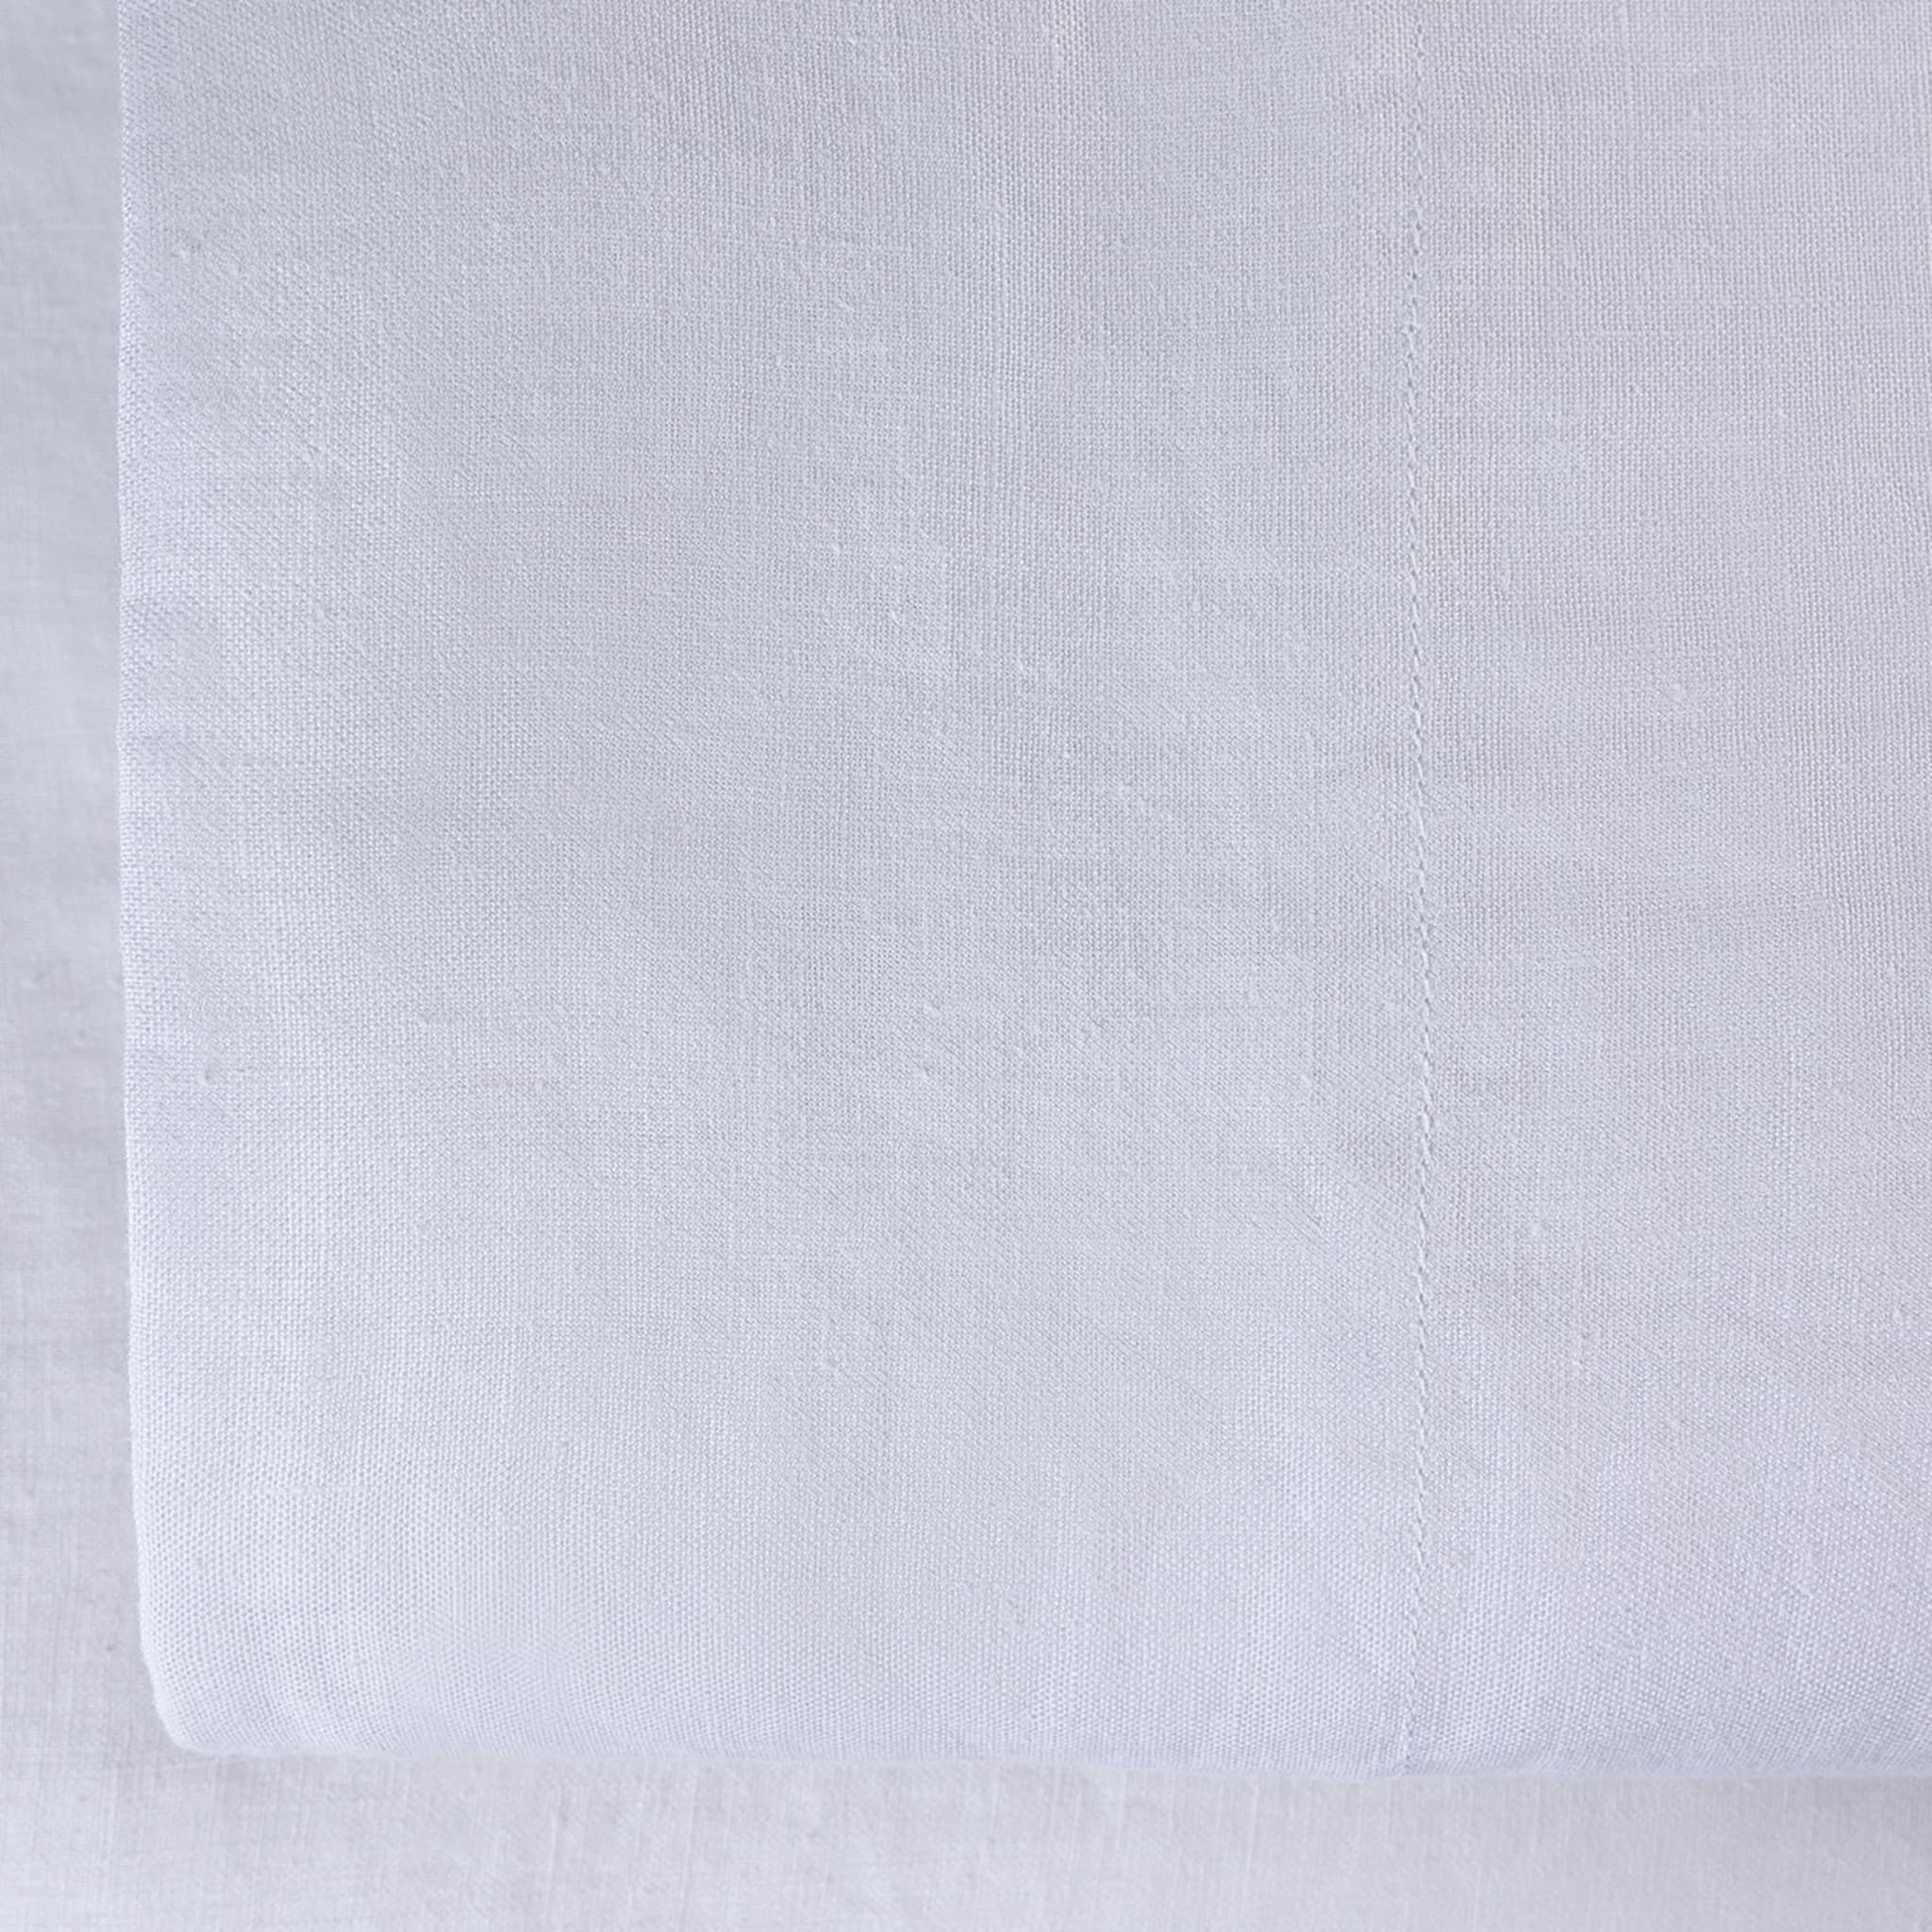 Kanapa White Double Bed Sheet - Alternative view 1